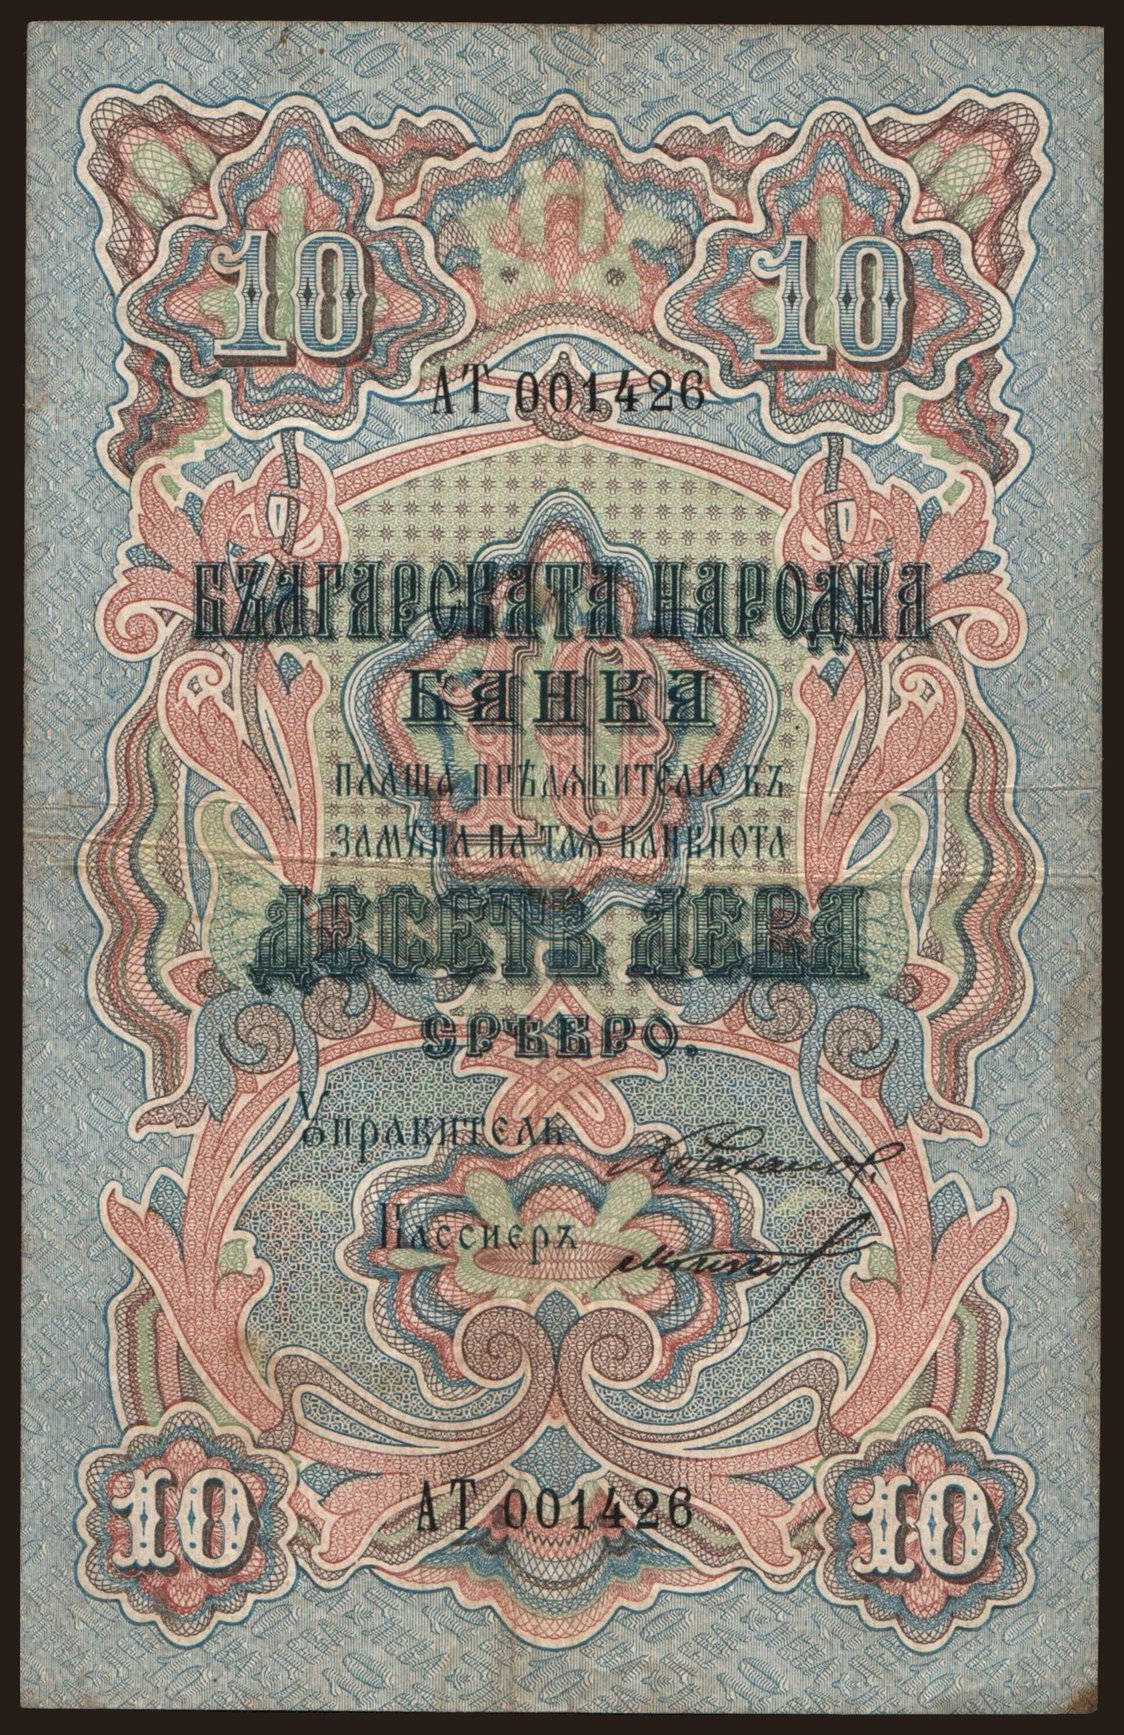 10 leva, 1903